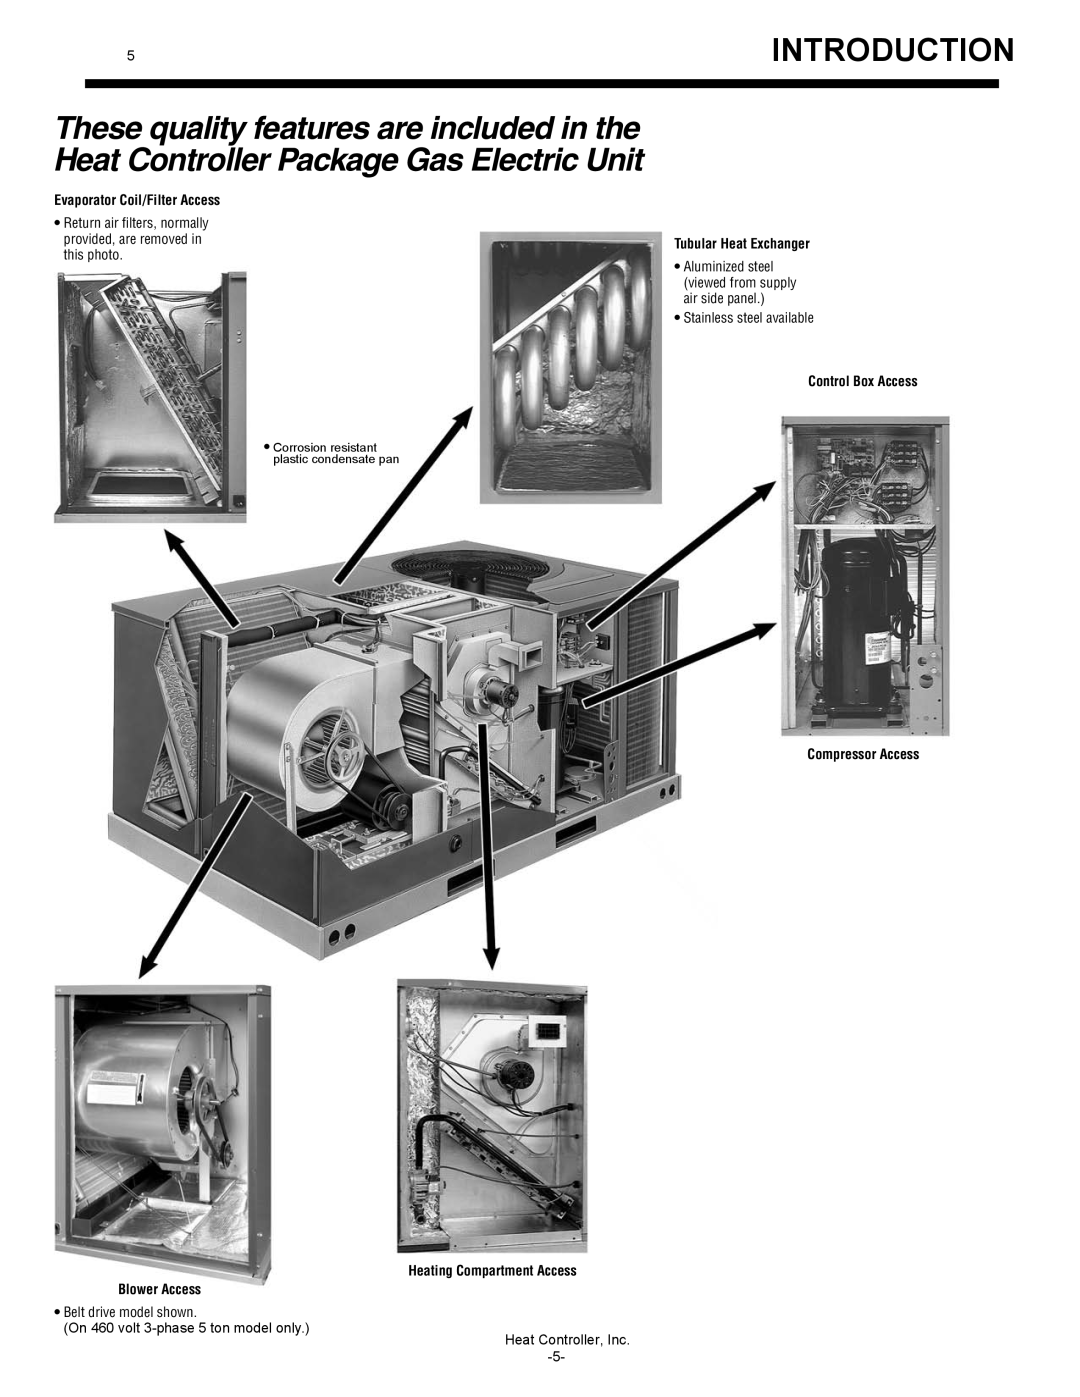 Heat Controller TGC048C-4K-135 Introduction, Evaporator Coil/Filter Access, Tubular Heat Exchanger, Control Box Access 